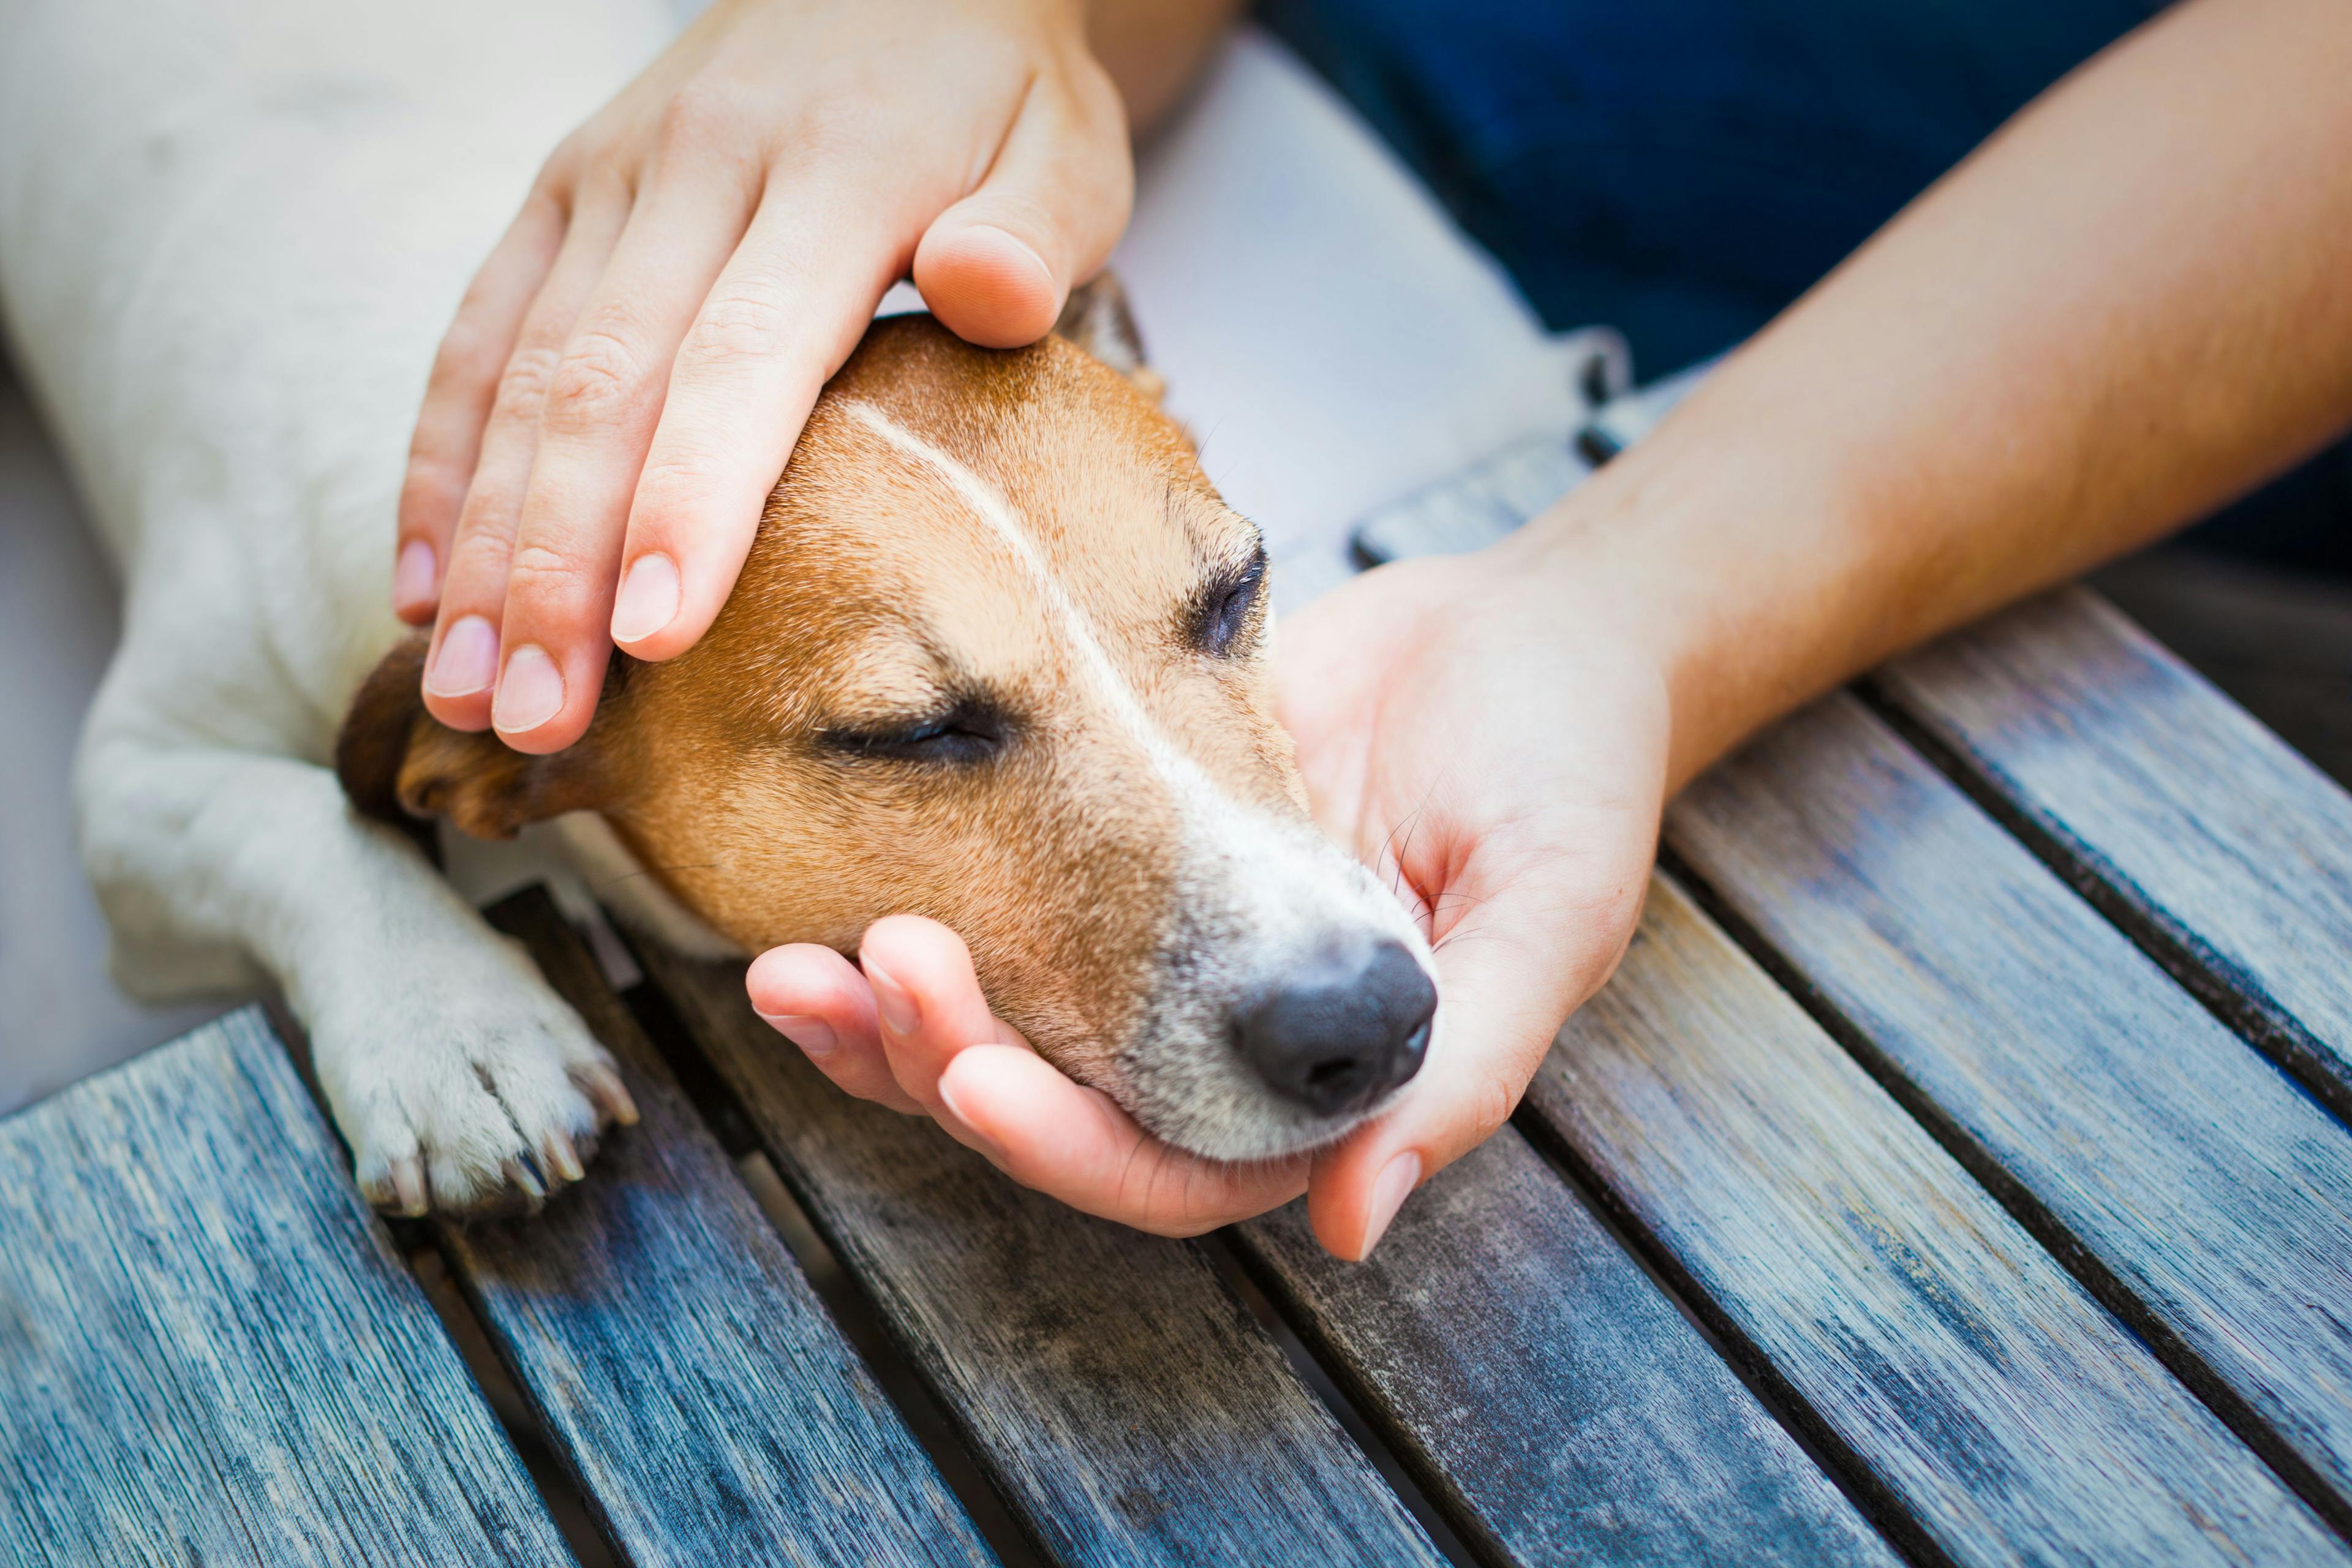 Recreational drugs makes ASPCA’s annual list of top pet toxins 